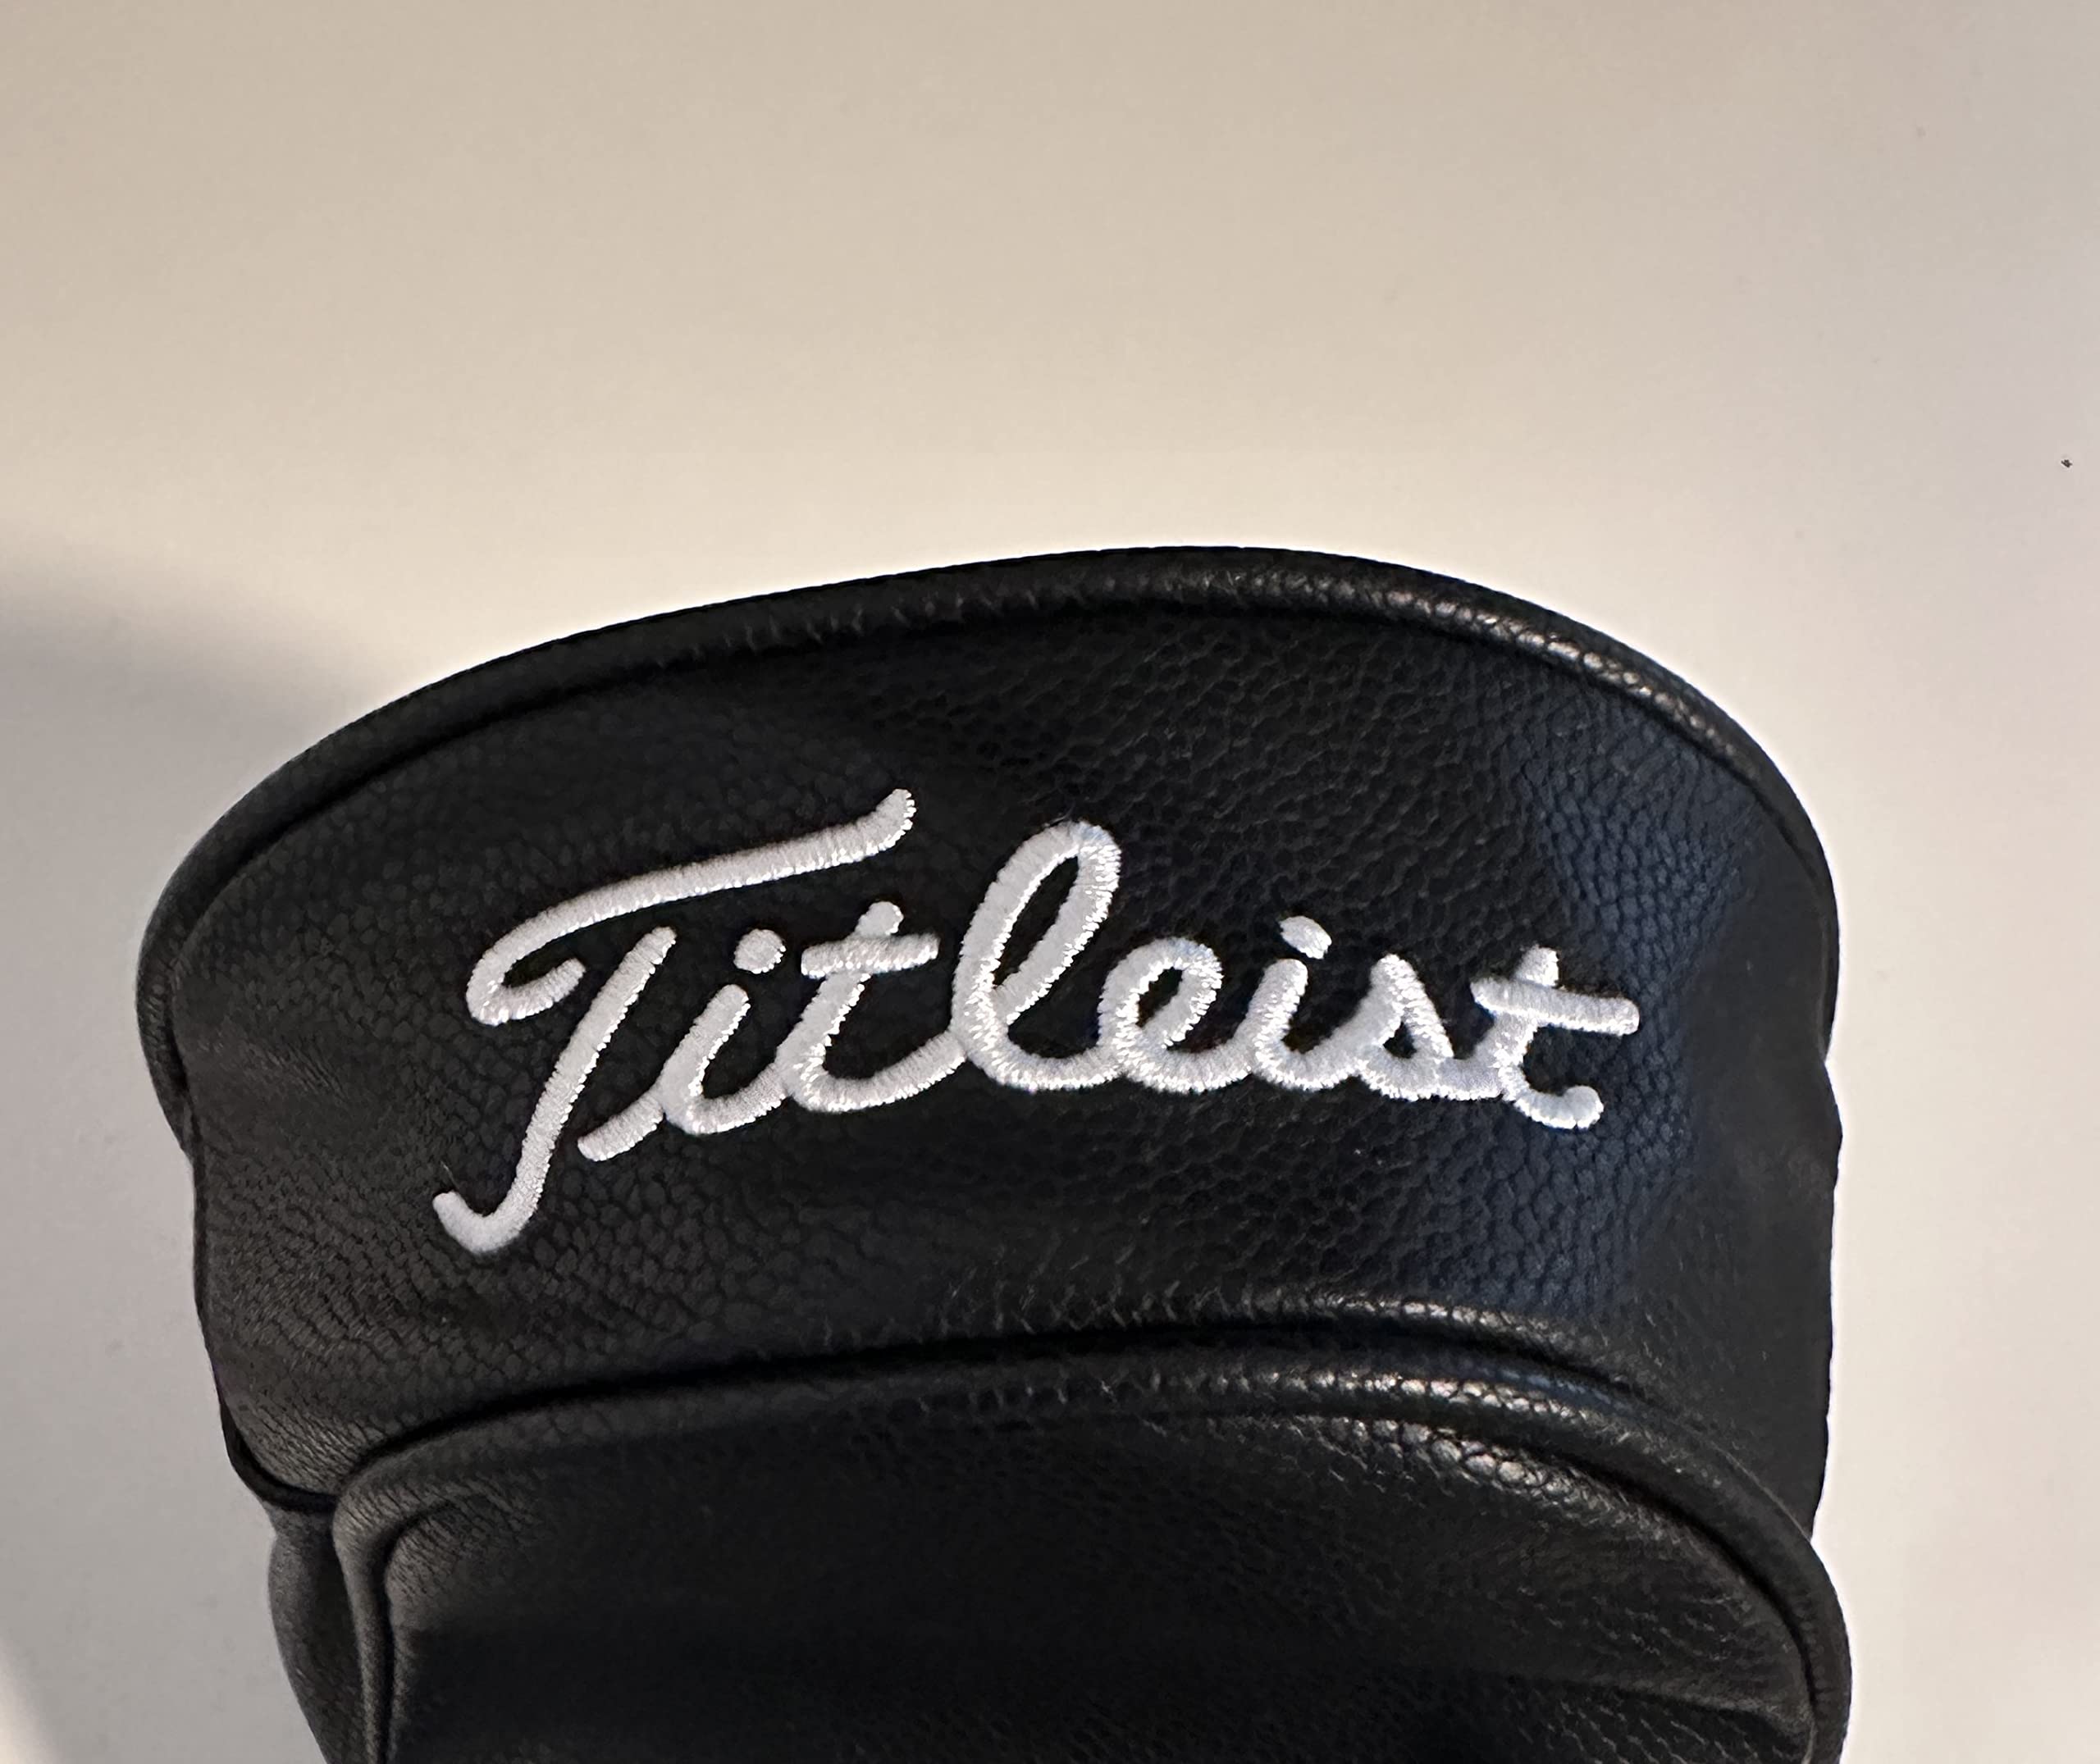 New TITLEIST TSR Leather Driver Headcover (TSR1, TSR2, TSR3, TSR4)